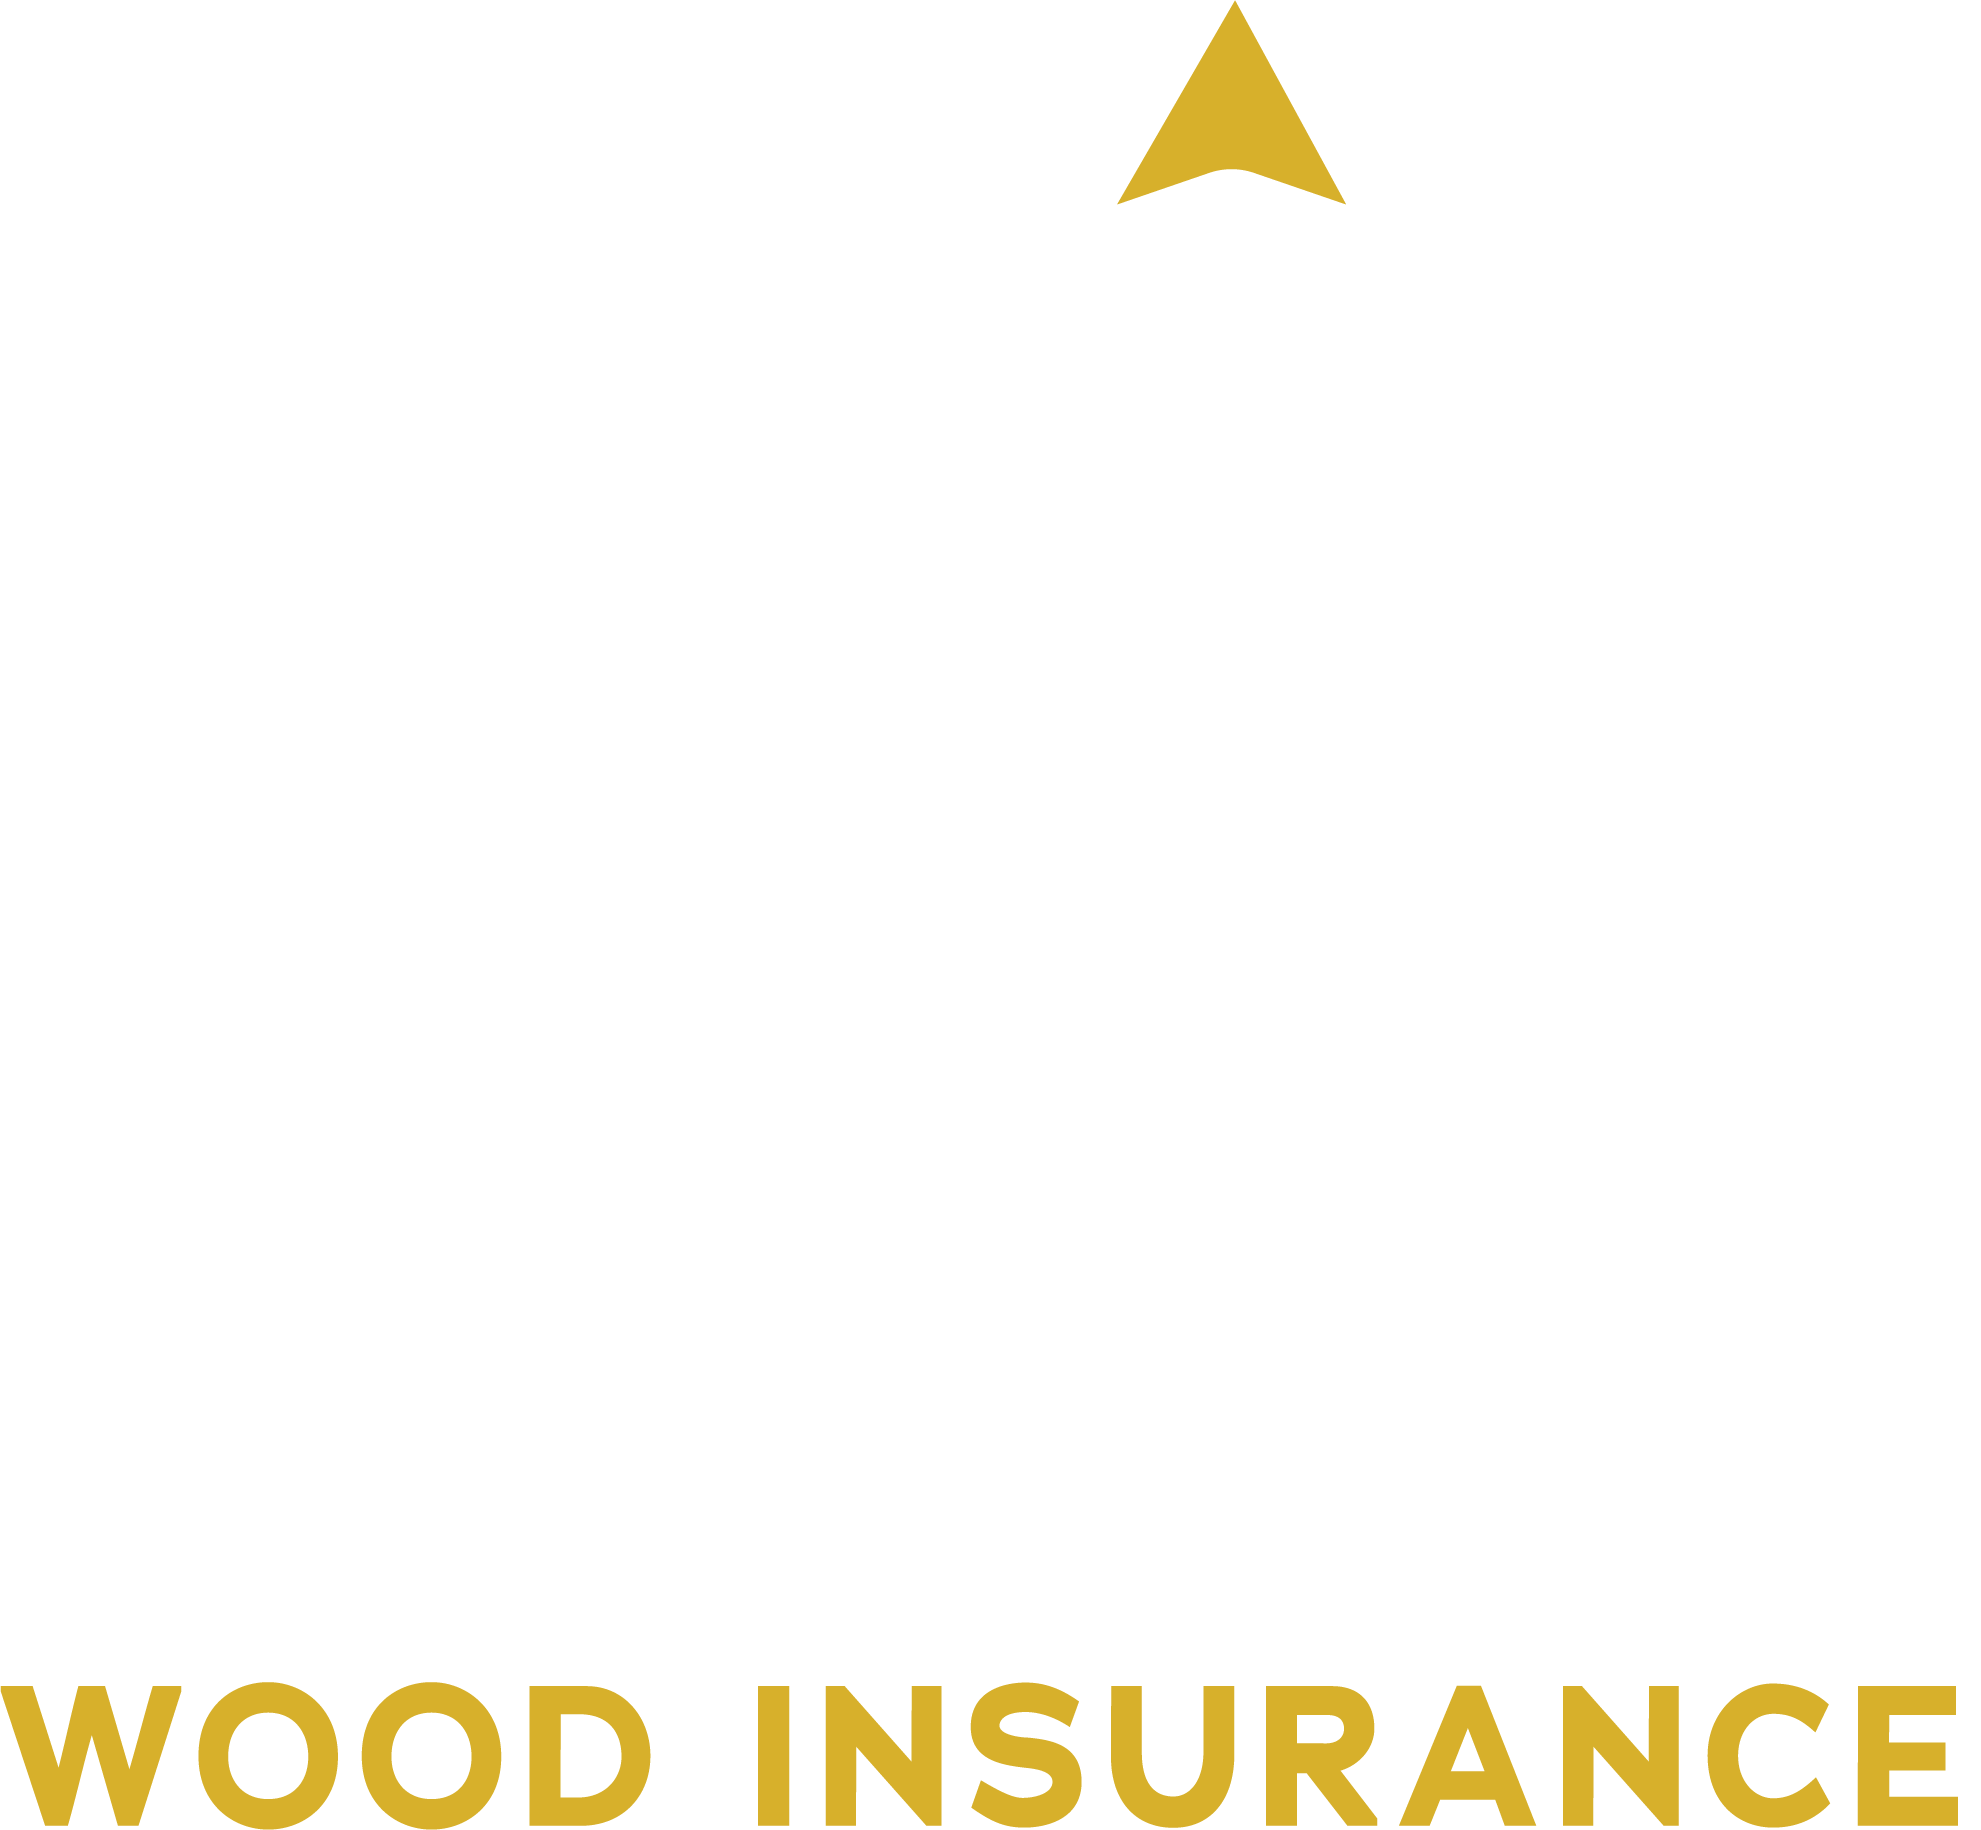 Northland Wood Insurance Logo - Vertical - White